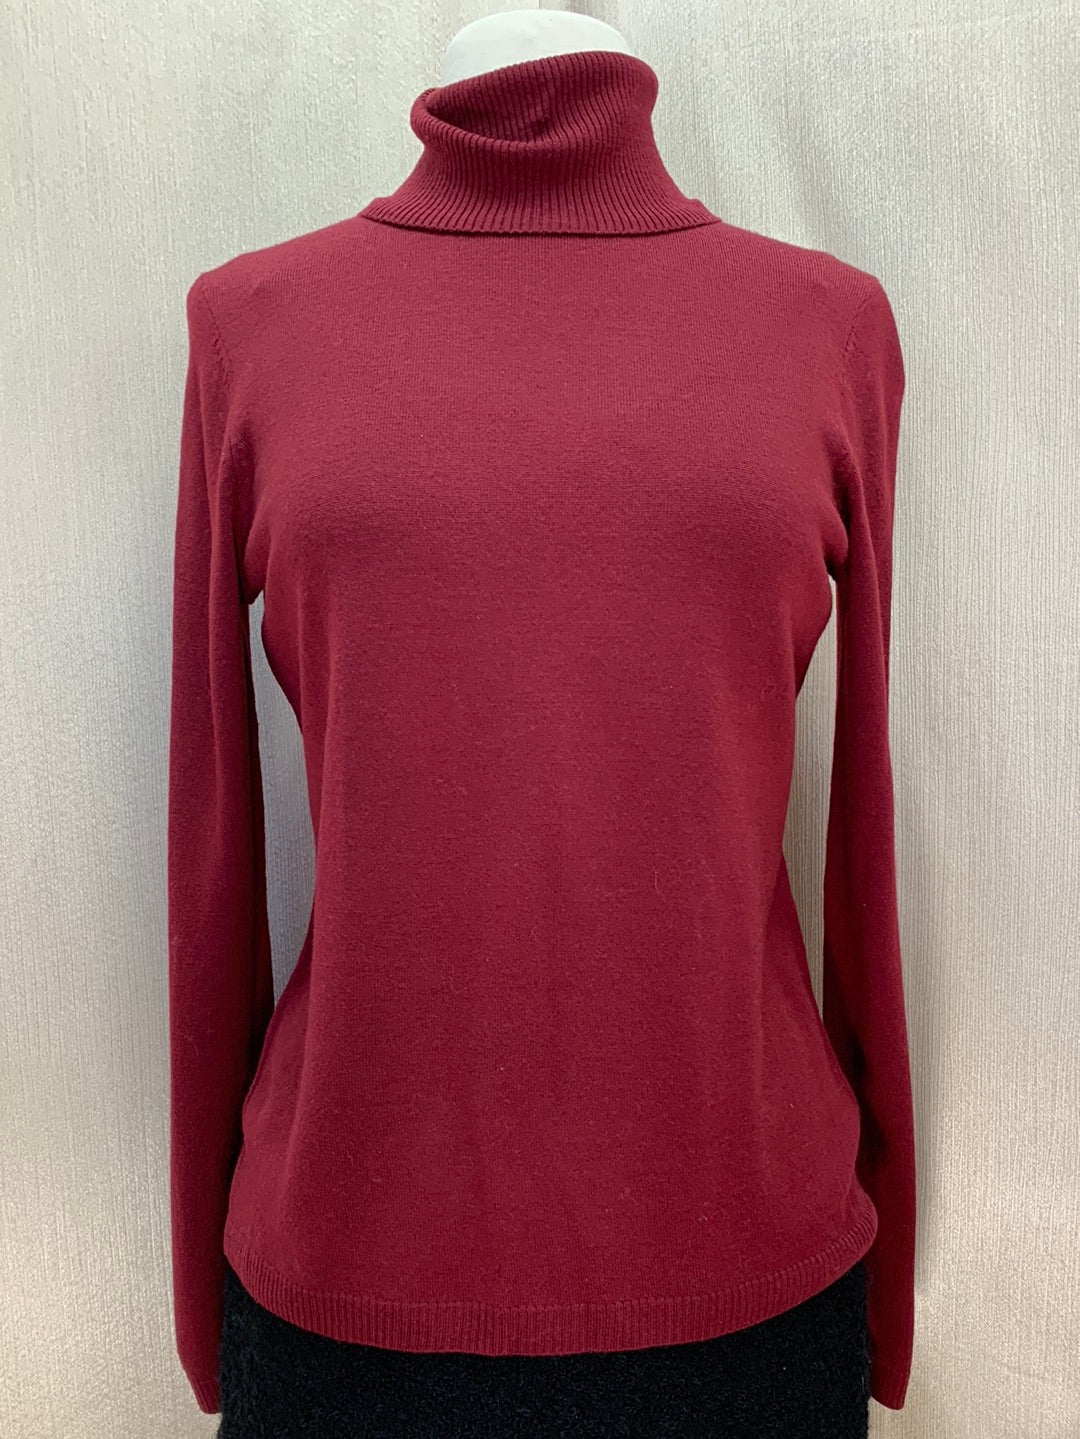 PENDLETON maroon red Merino Wool Long Sleeve Turtleneck Sweater - S